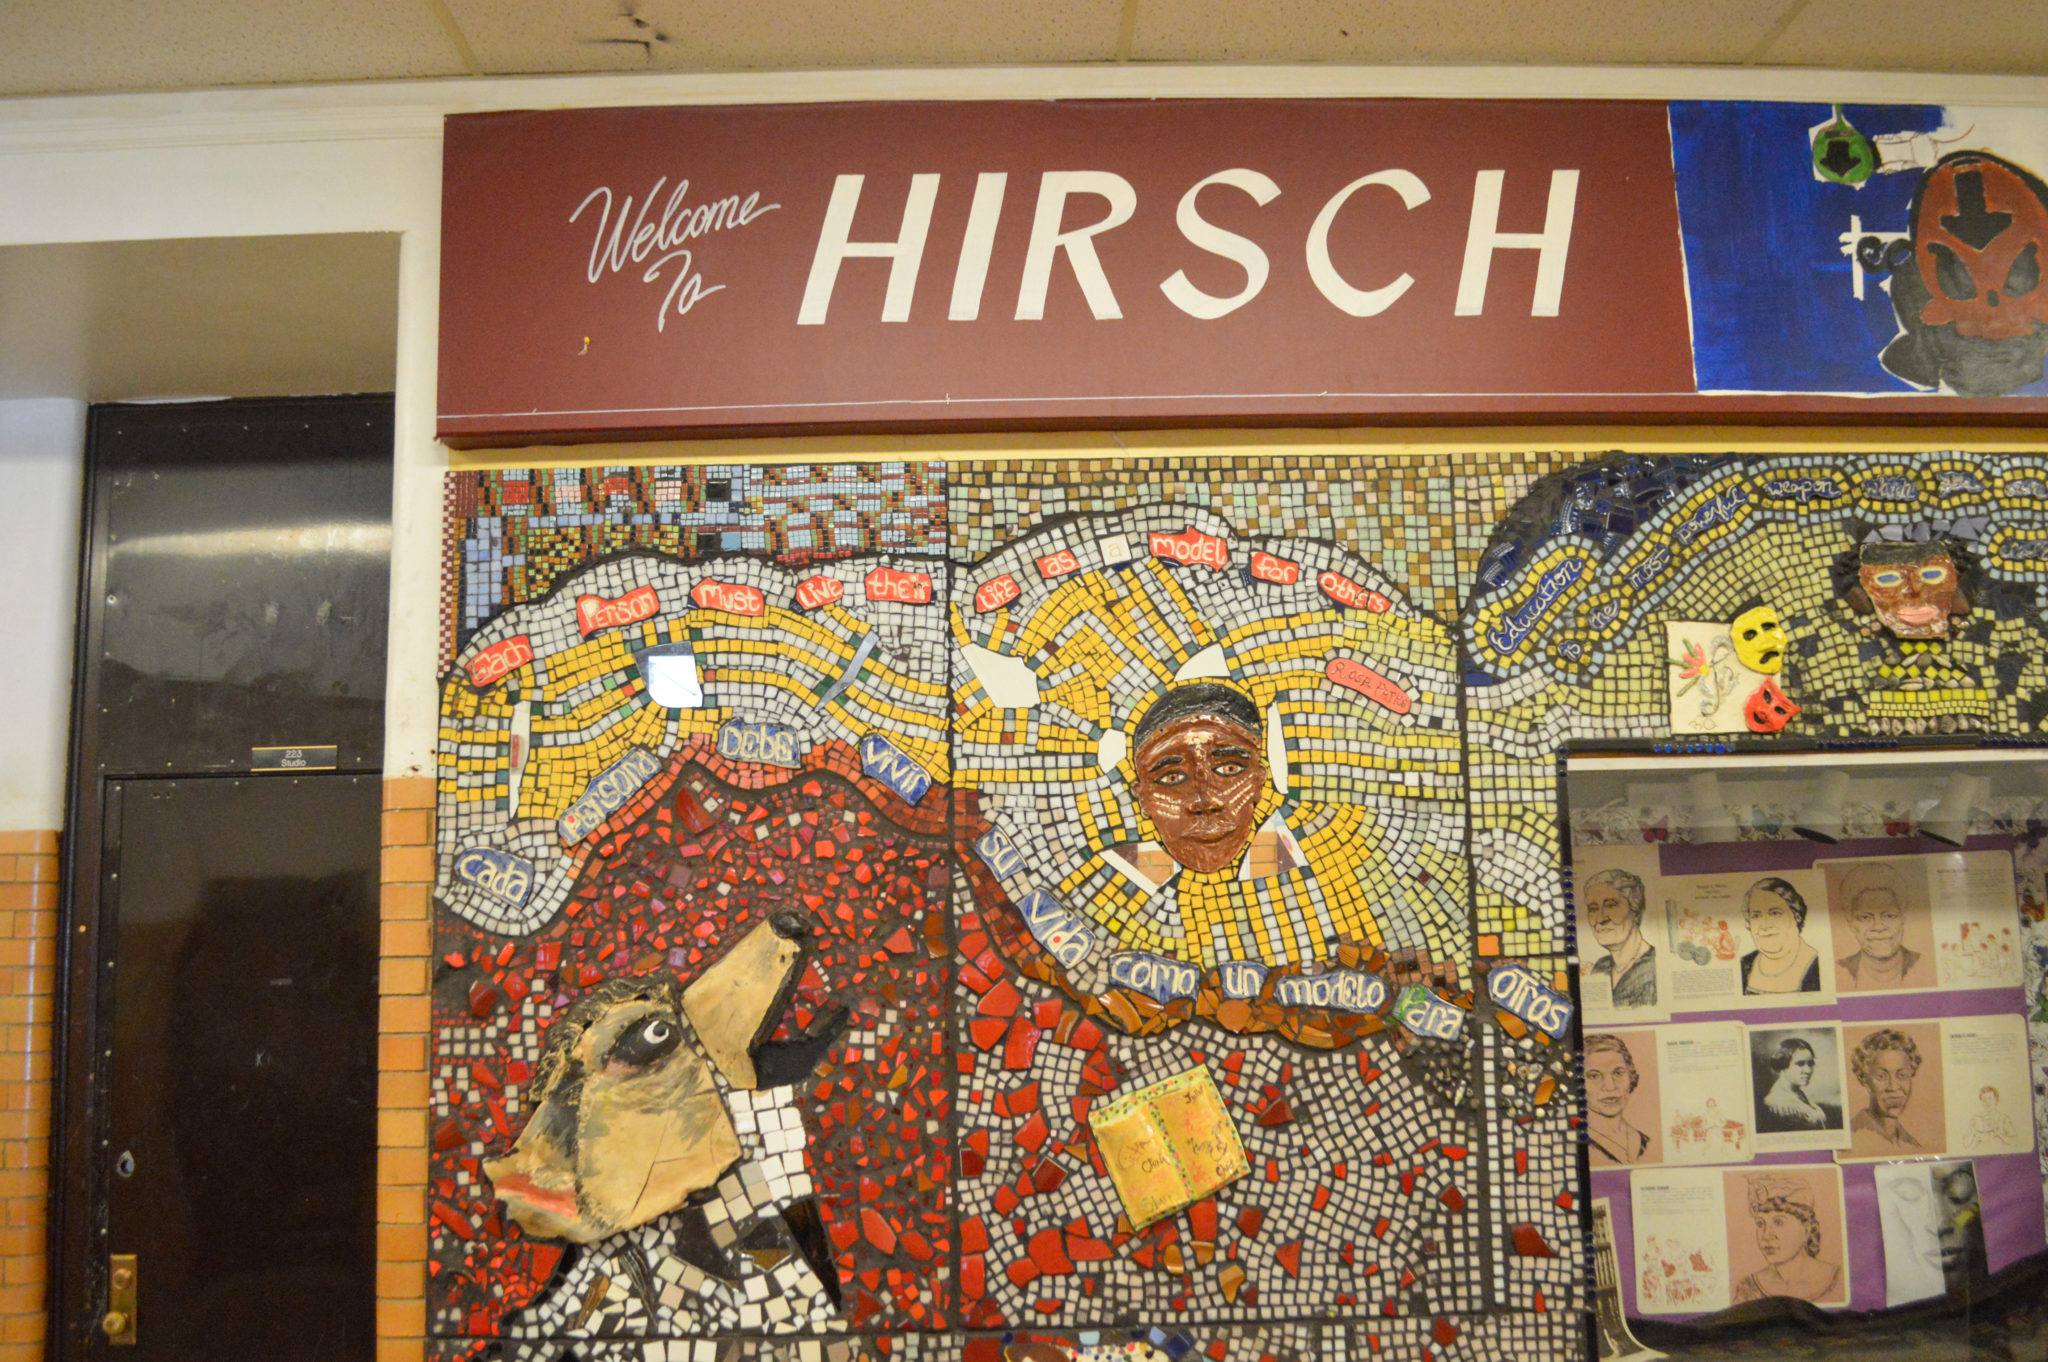 Hirsch mosaic